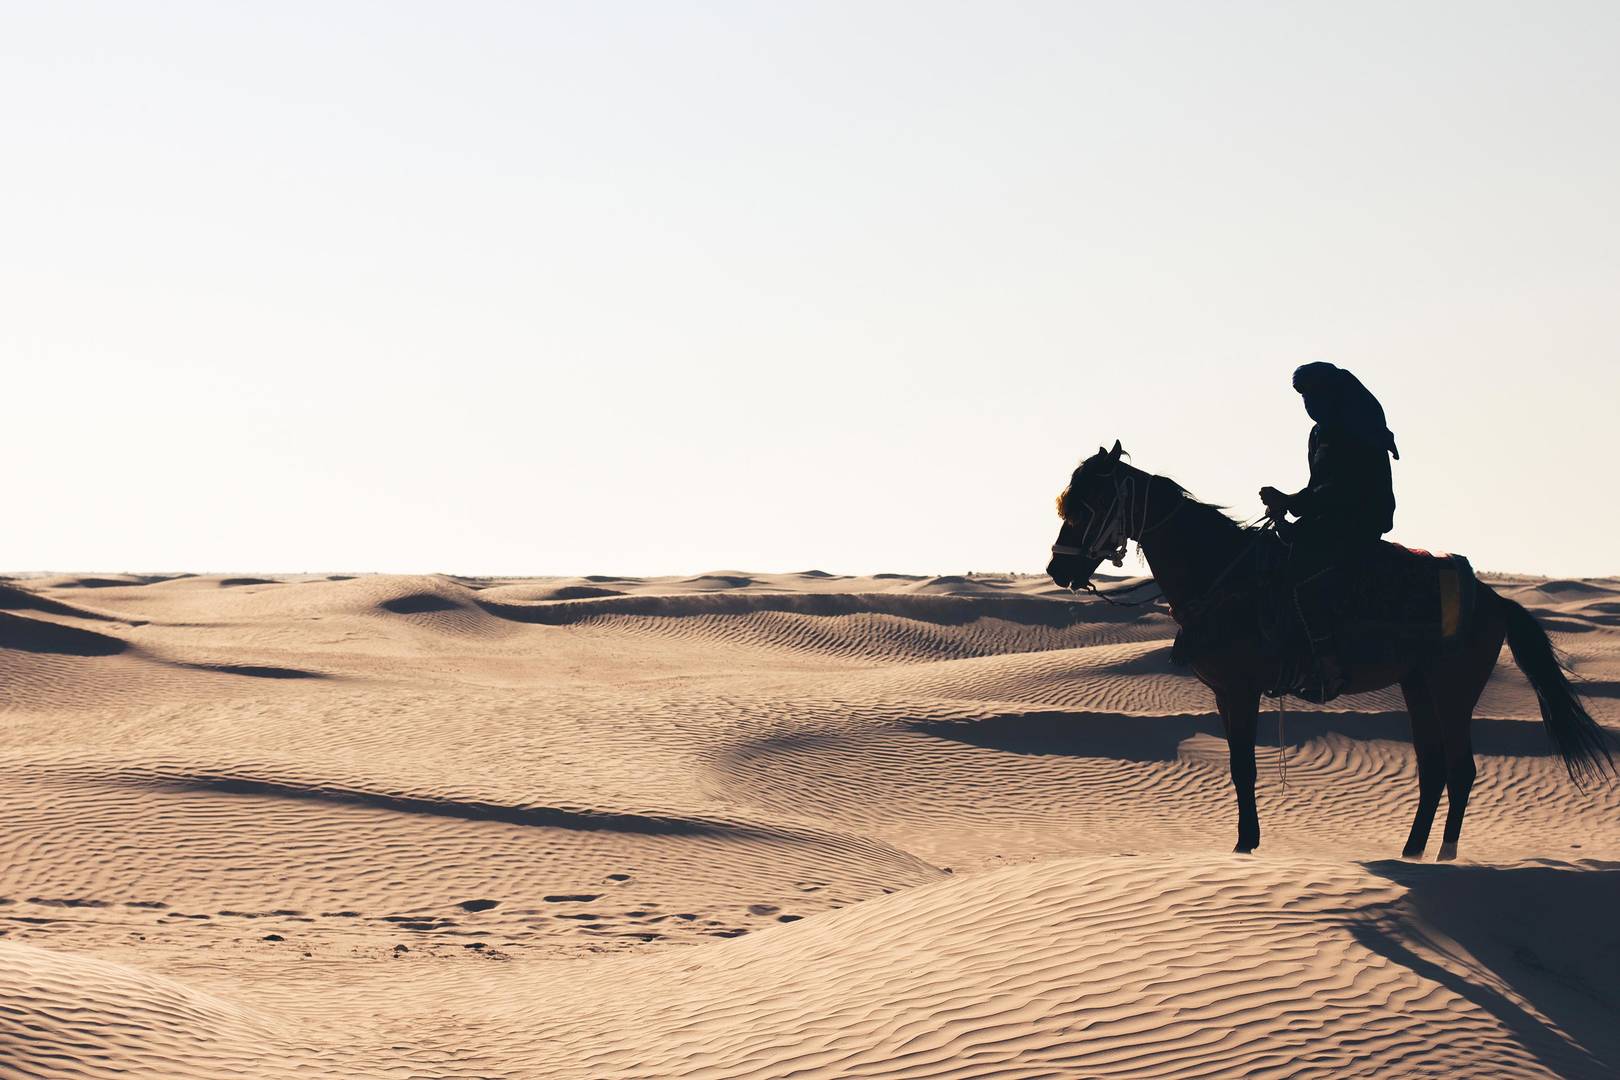 Explore the desert on horseback | Al Wathba |Jumeirah